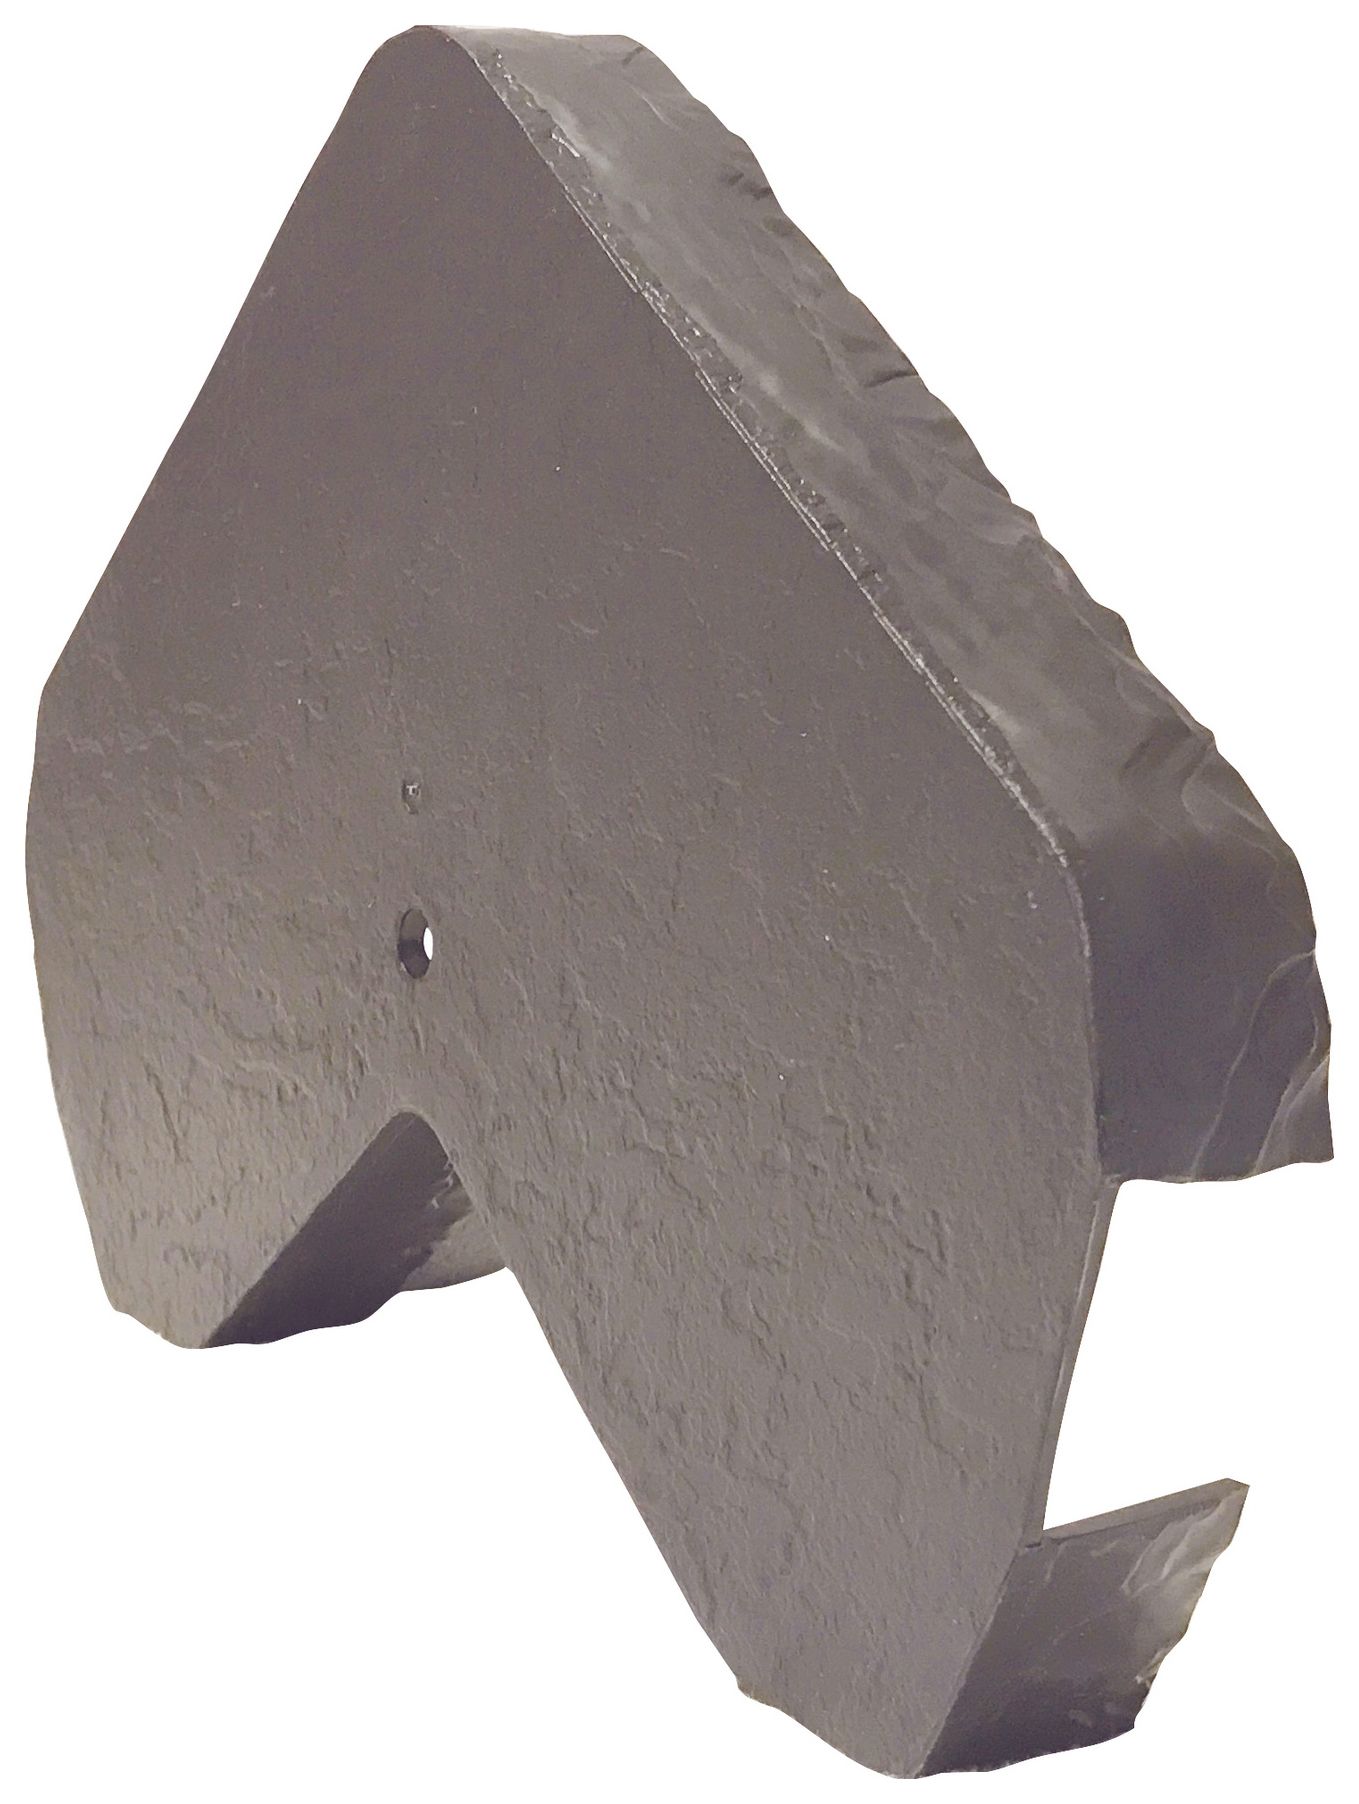 Image of Envirotile Plastic Lightweight Dark Brown Gable End Cap - 28 x 325 x 6mm